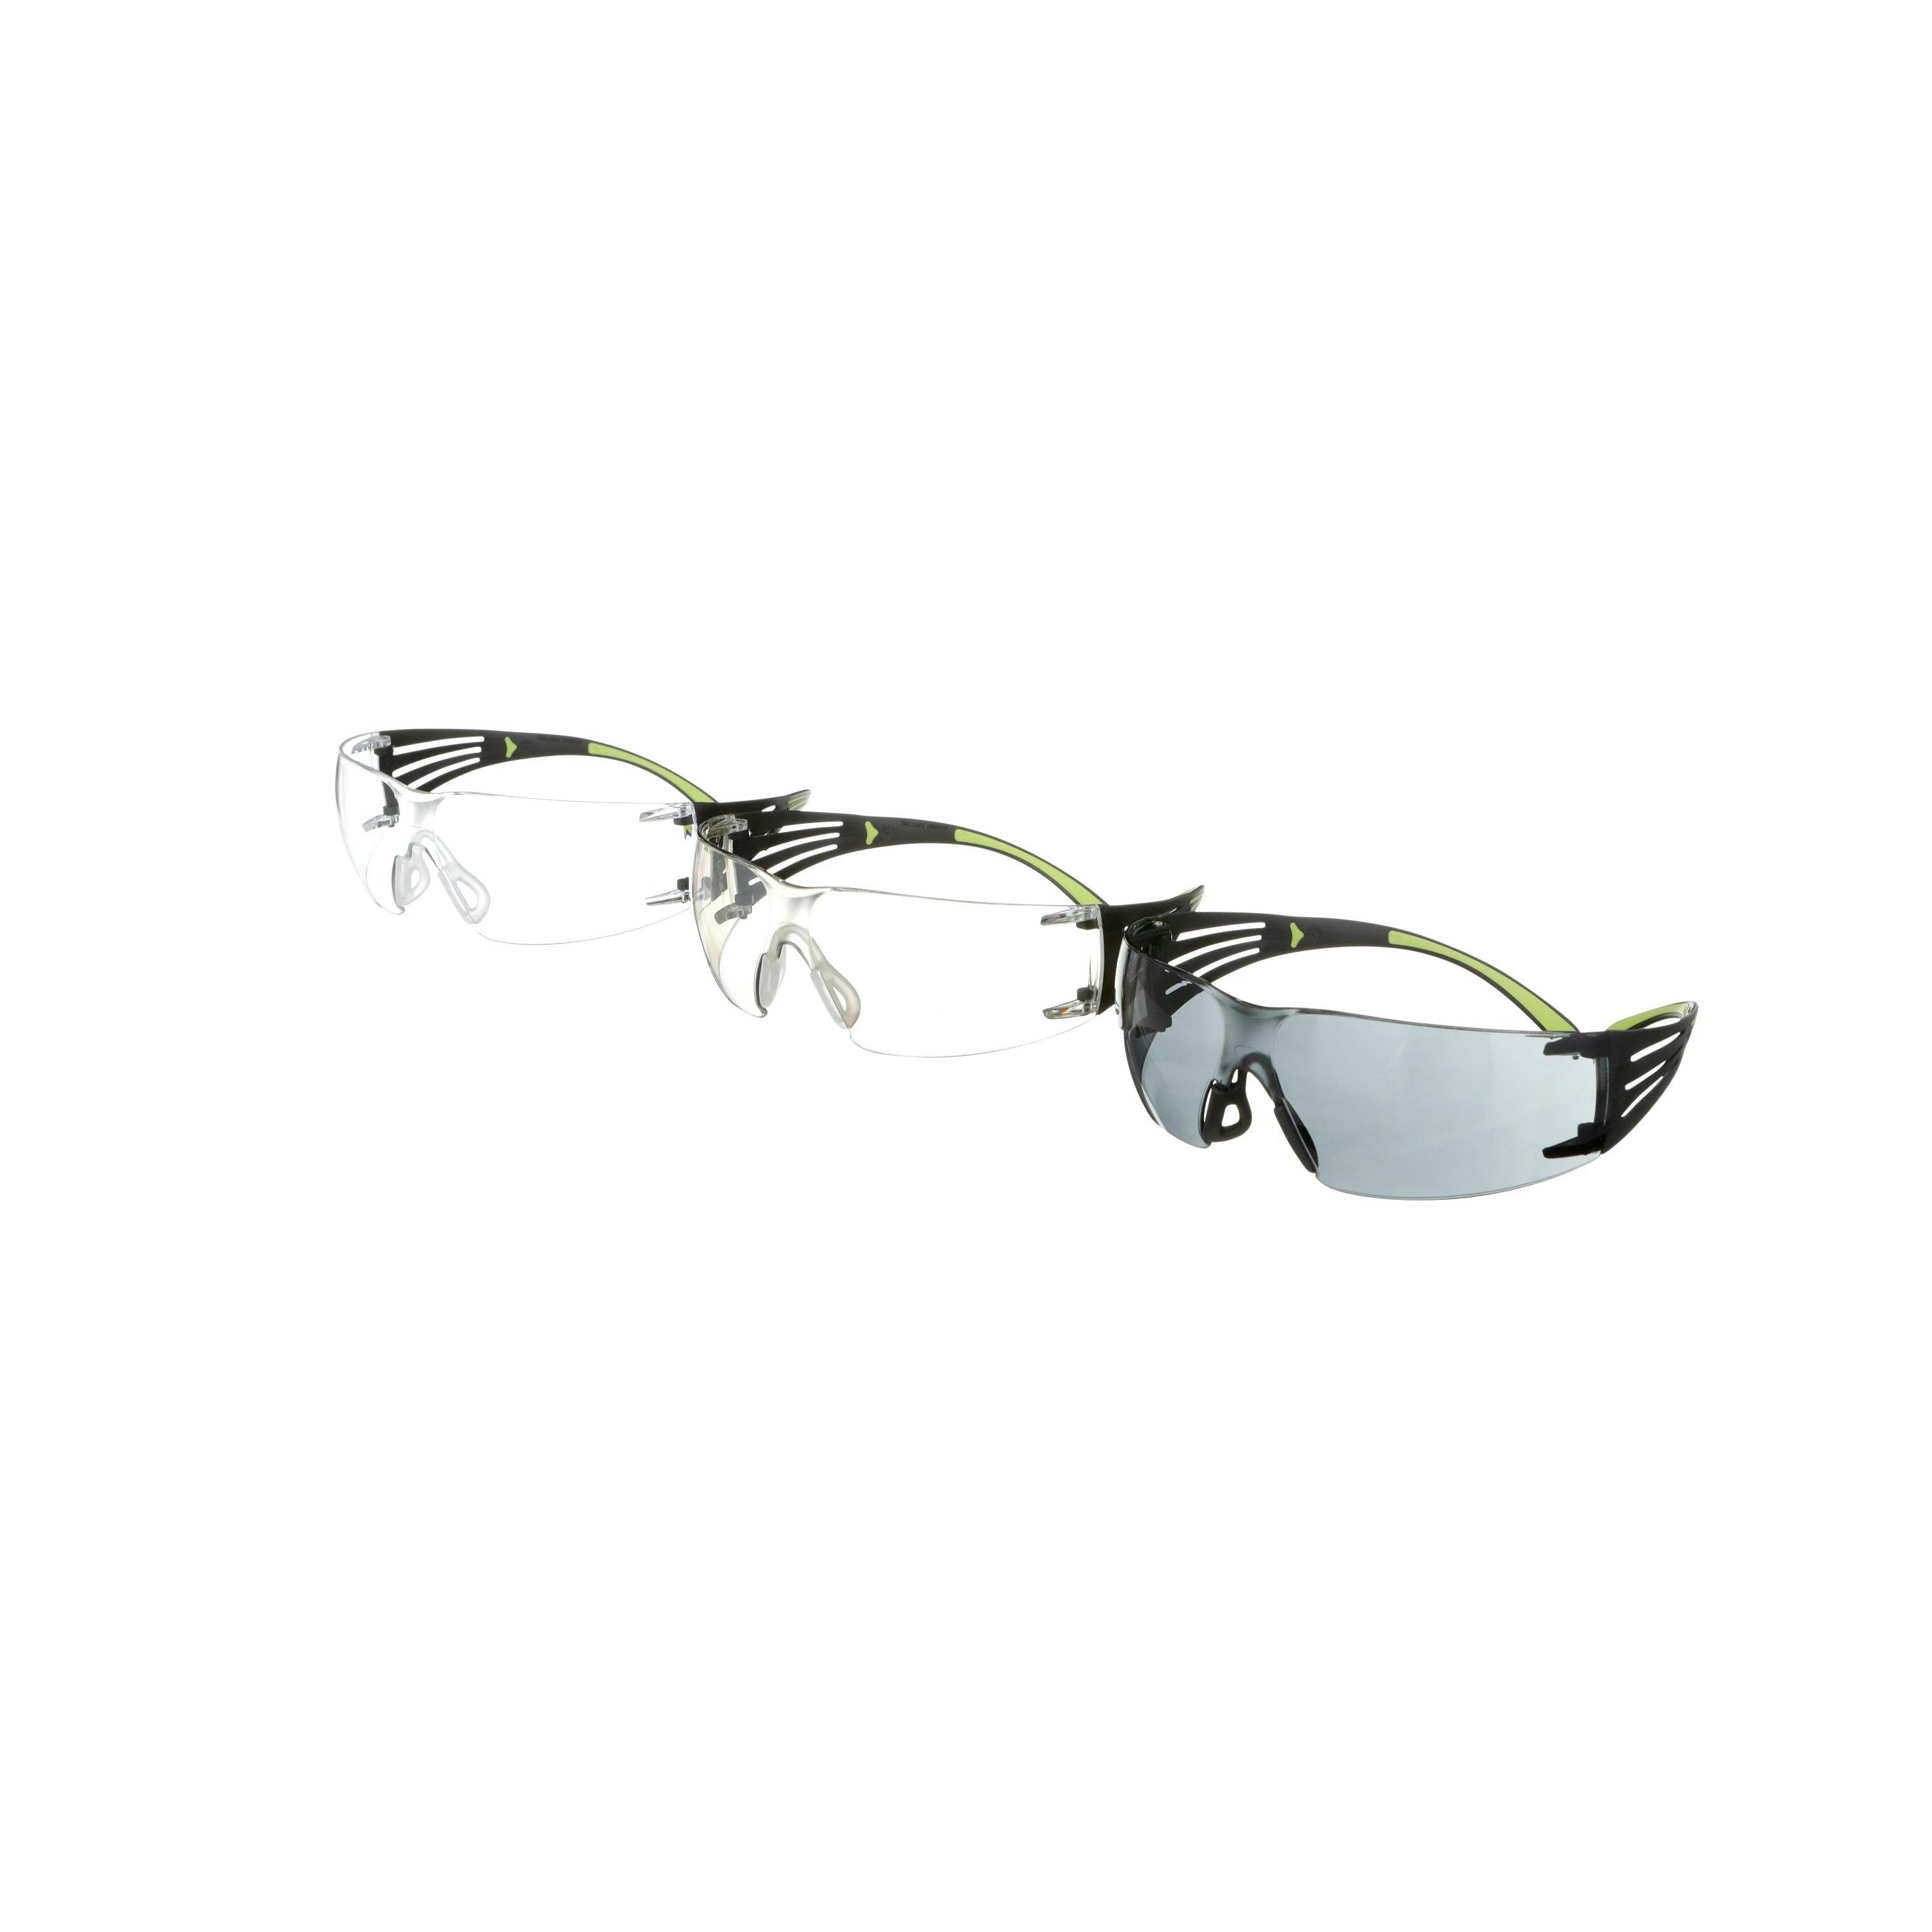 3M™ SecureFit™ 400 Safety Eyewear SF400-W-3PK-PS, 3 Pack: Clear + Mirror + Gray Lenses, Anti Fog